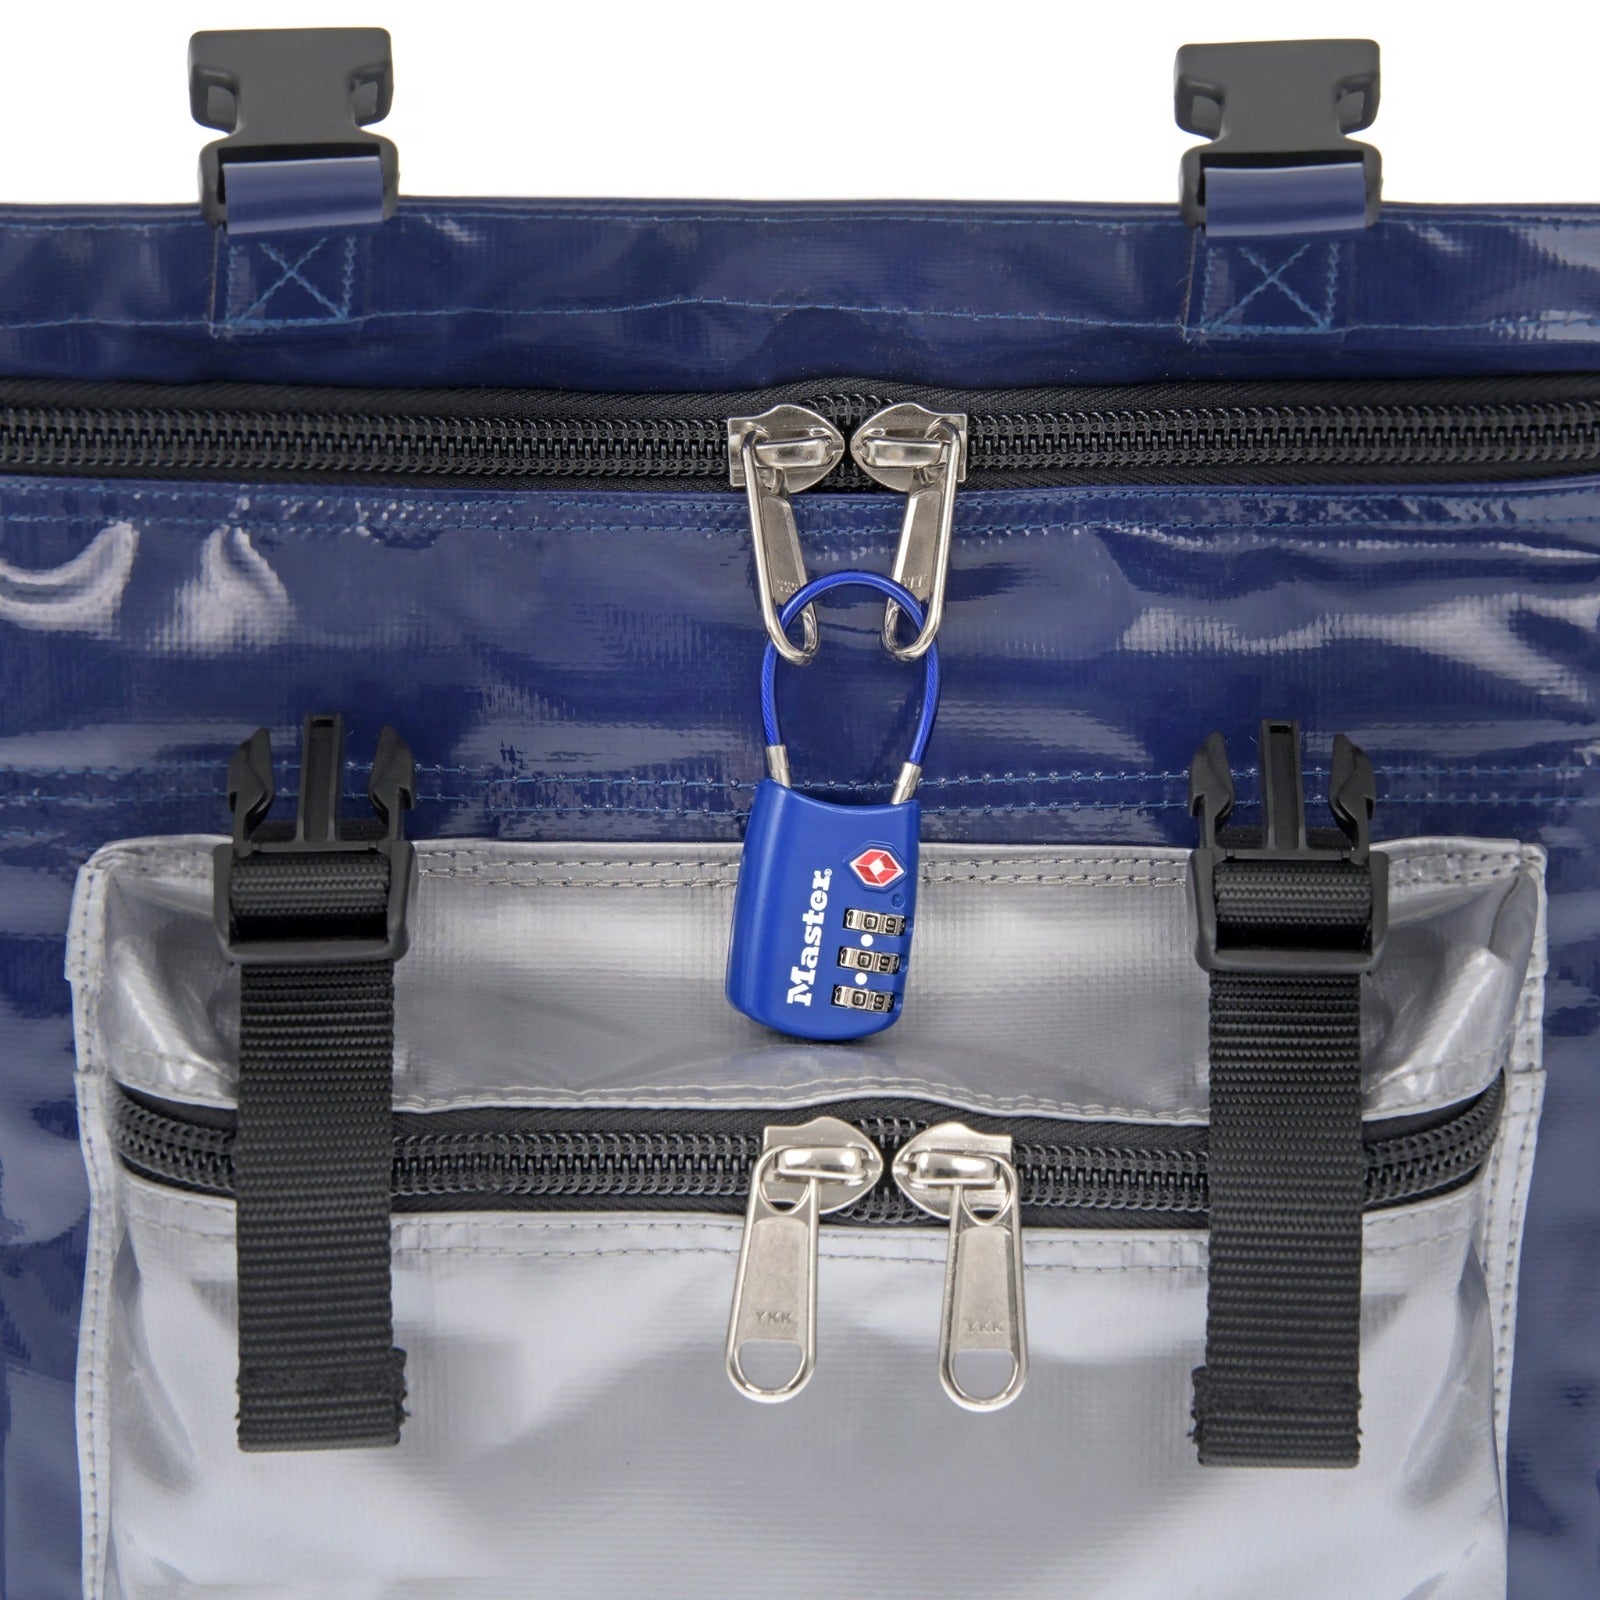 Tuff-Tool-Bags-Electrical-lockable-tool-bag-1-Locked